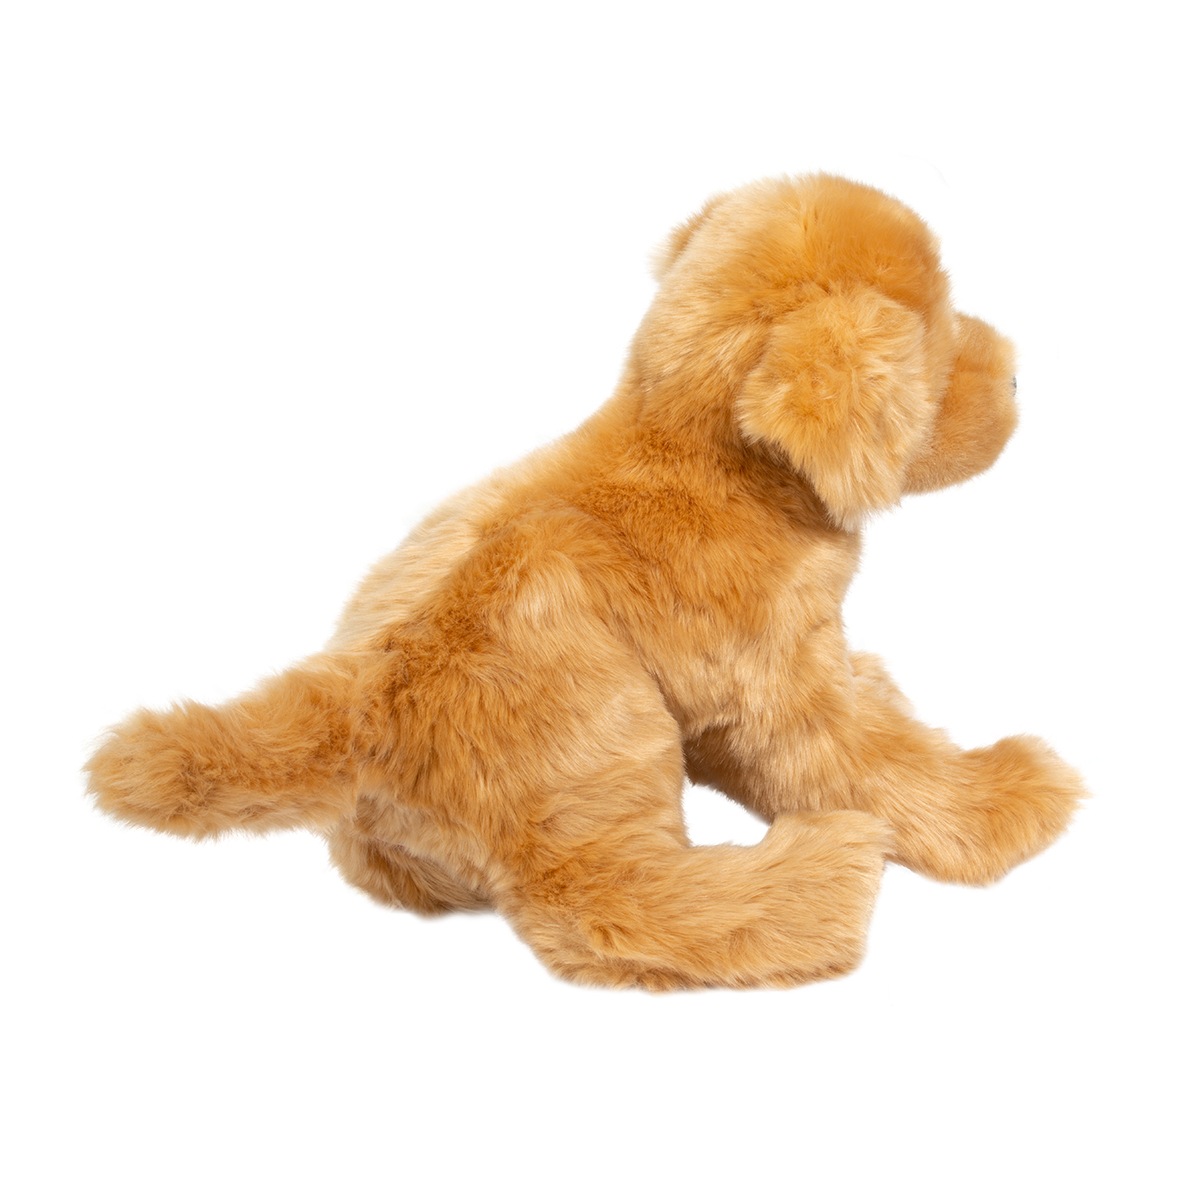 Douglas Golden Retriever Plush Stuffed Animal 16